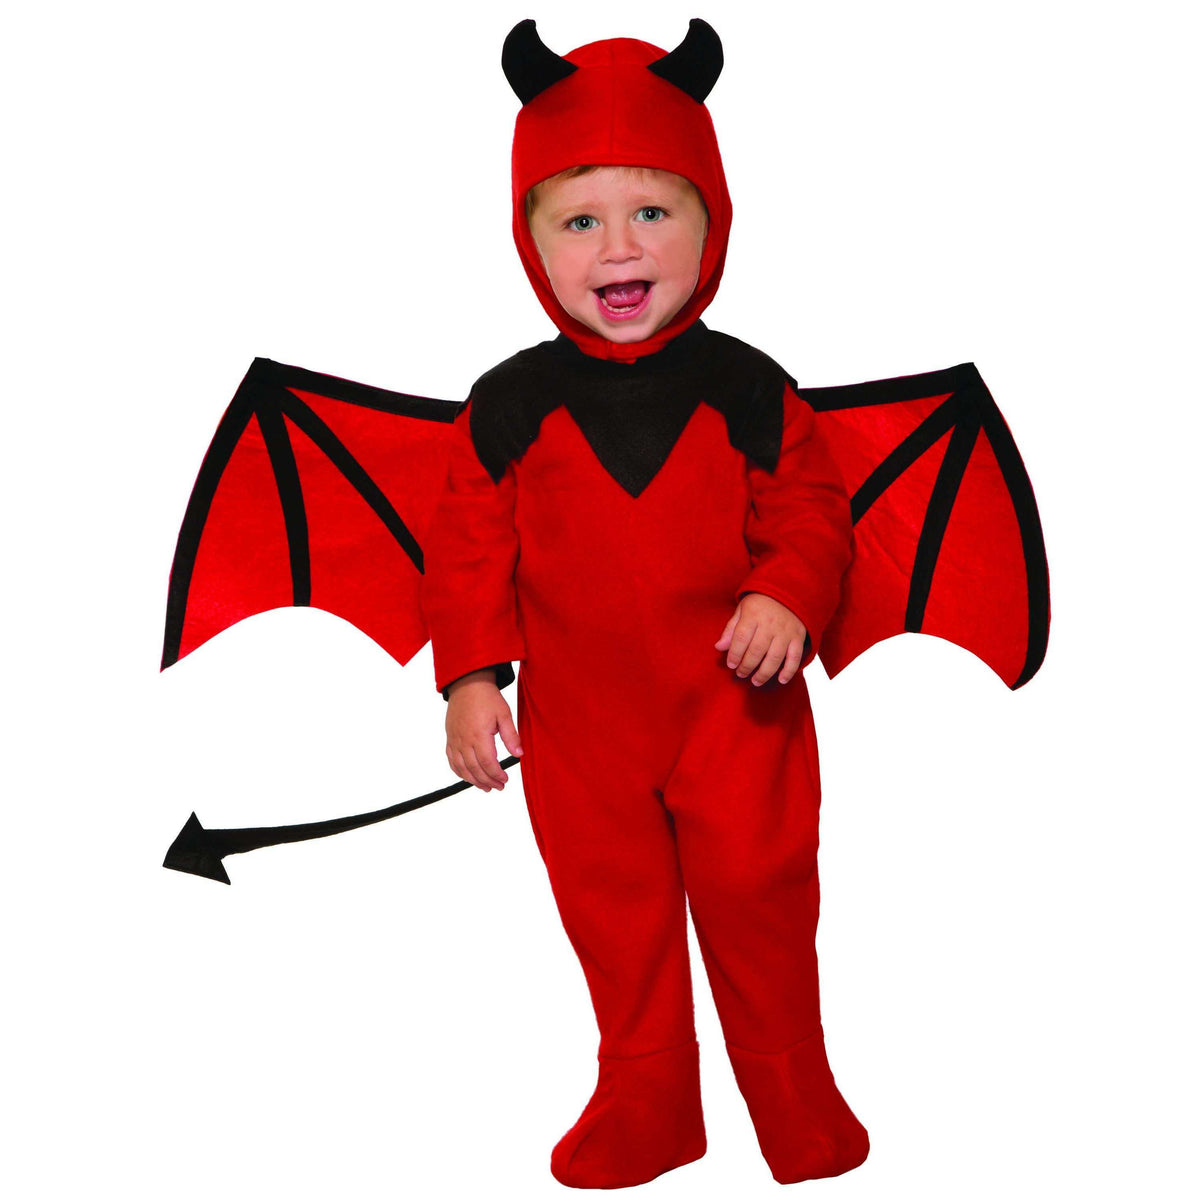 Daring Devil Toddler Costume